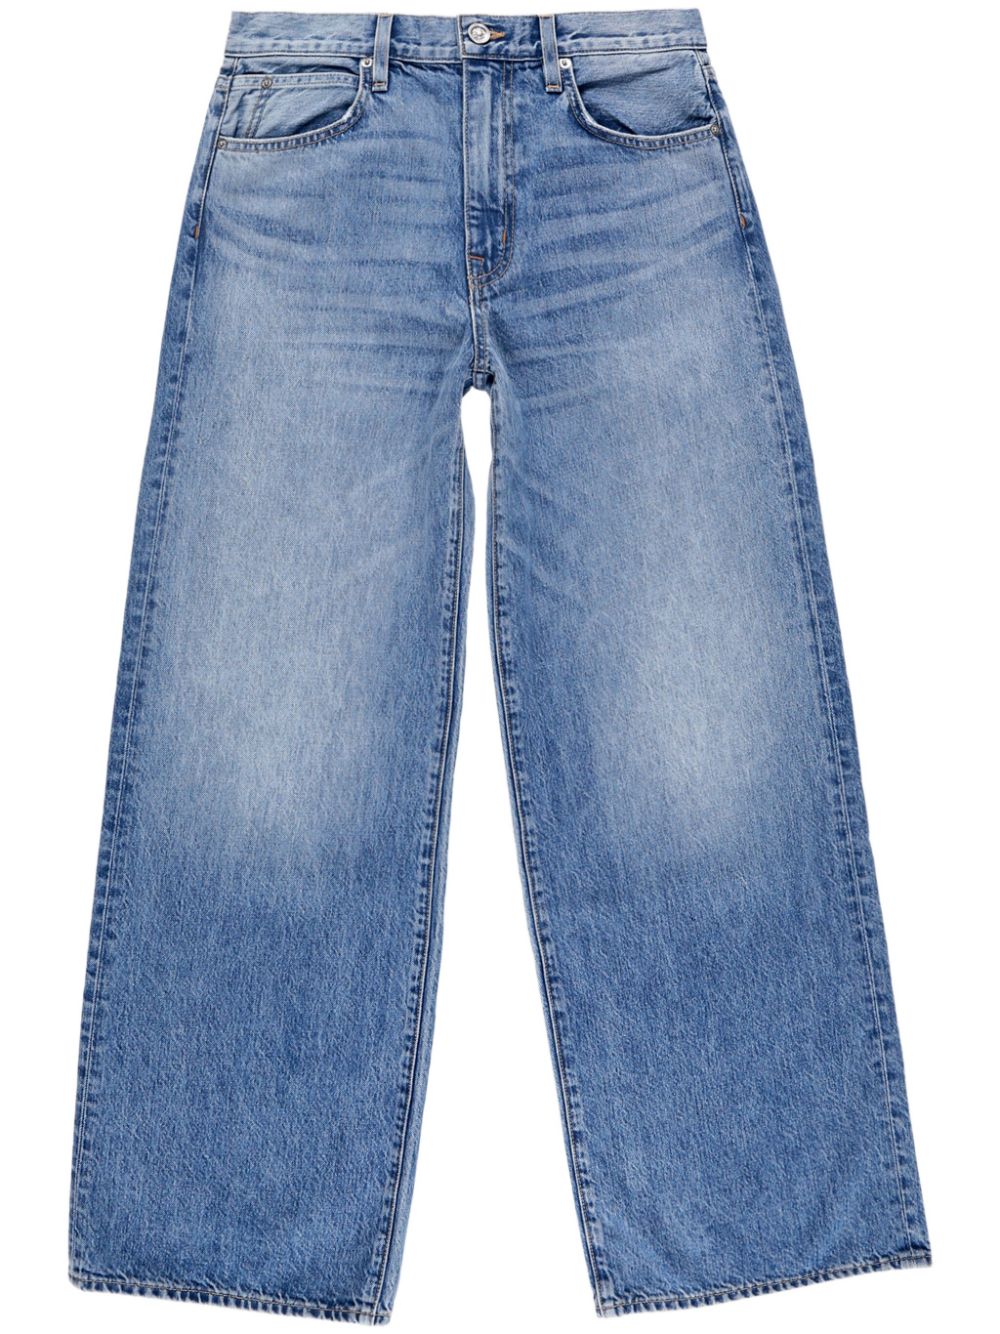 Selena wide-leg jeans